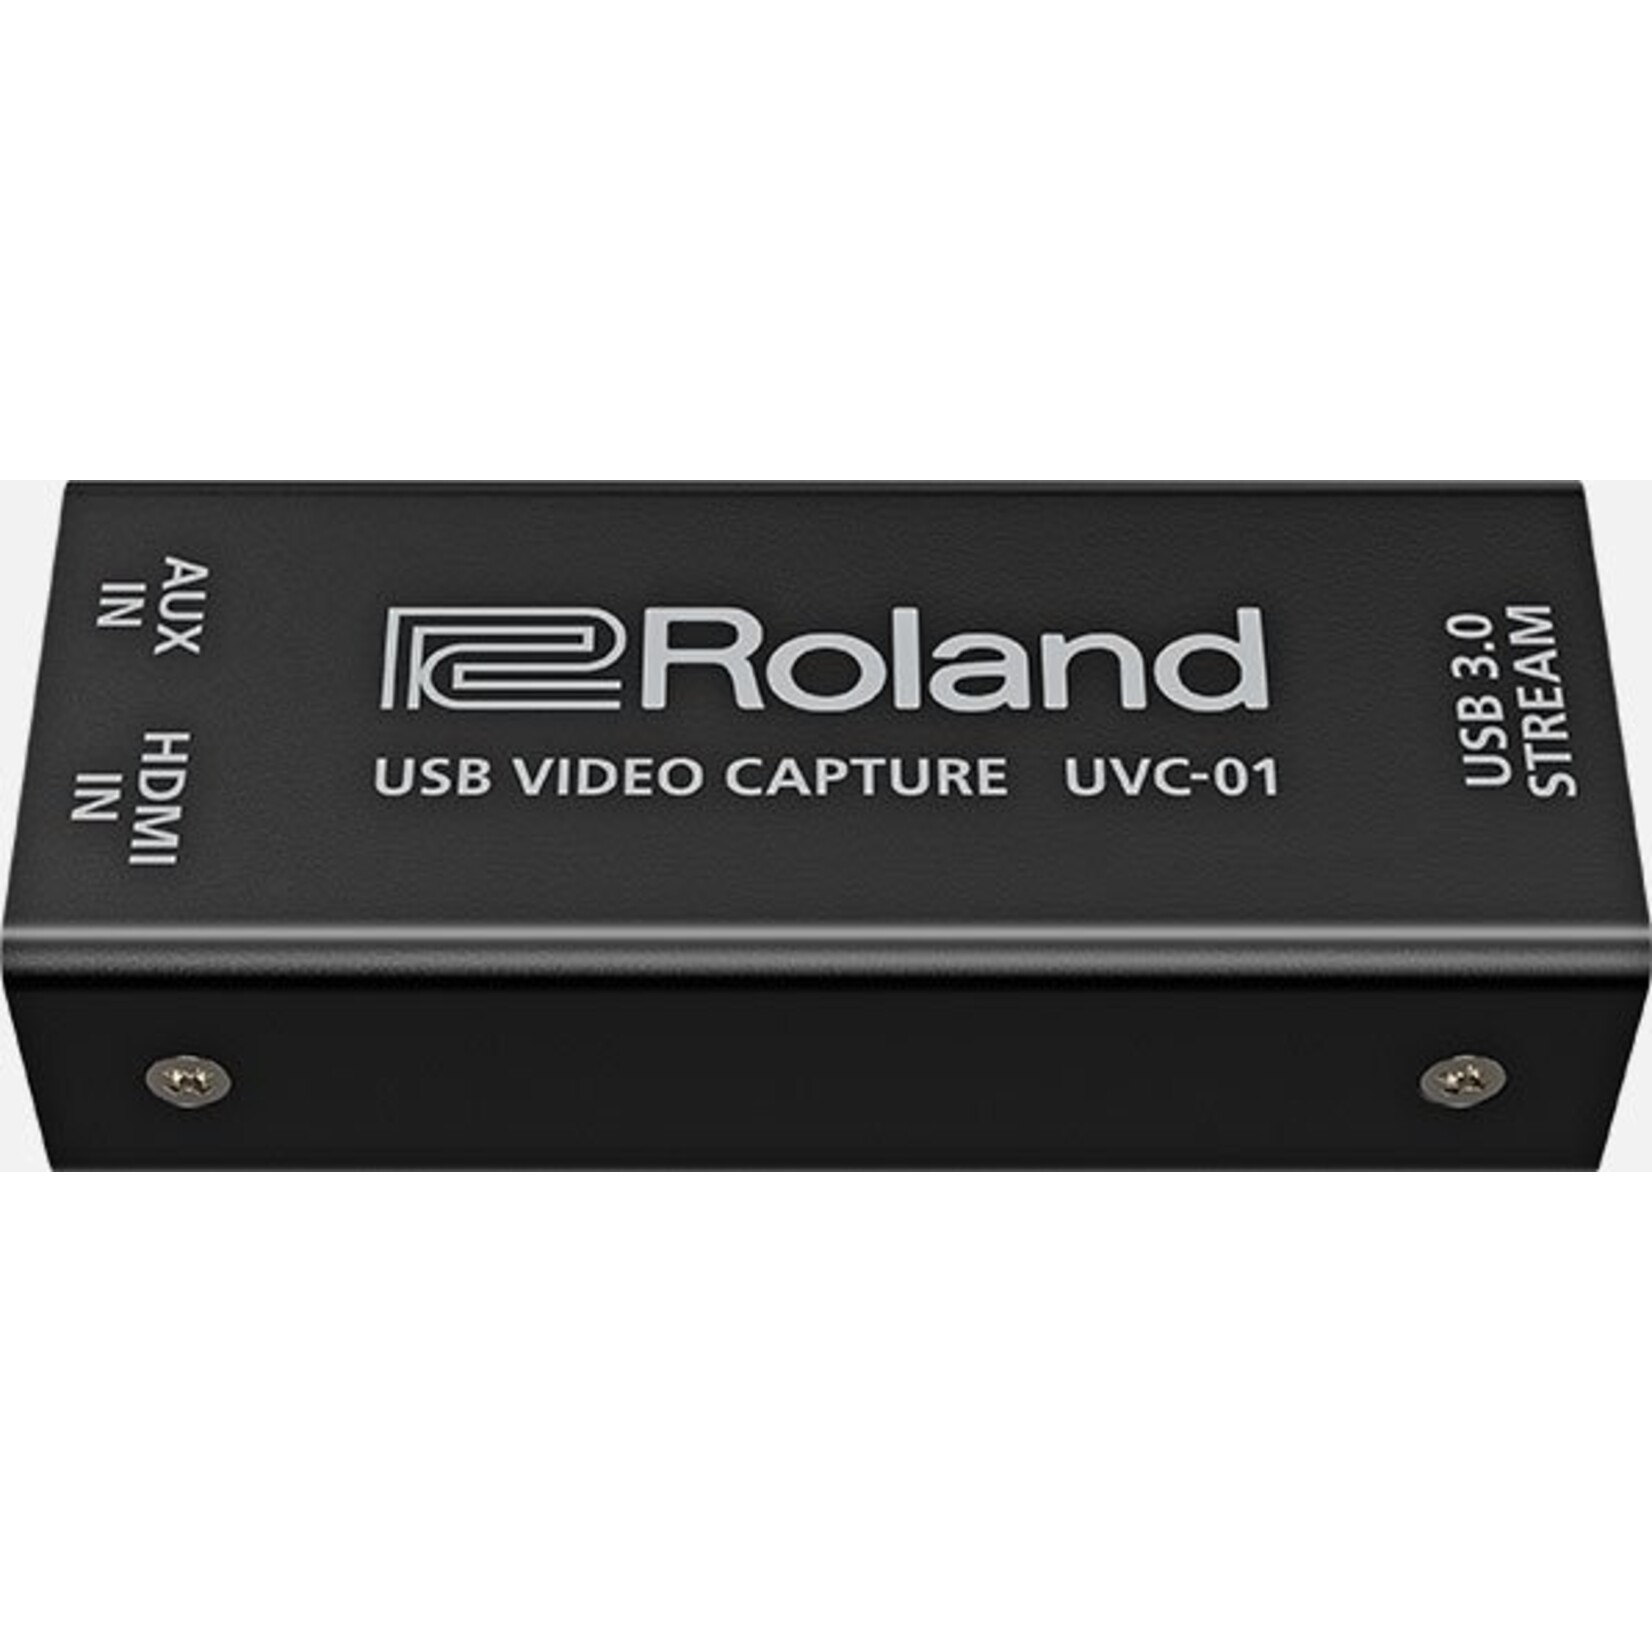 Roland UVC-01 USB Video Capture Streaming Device